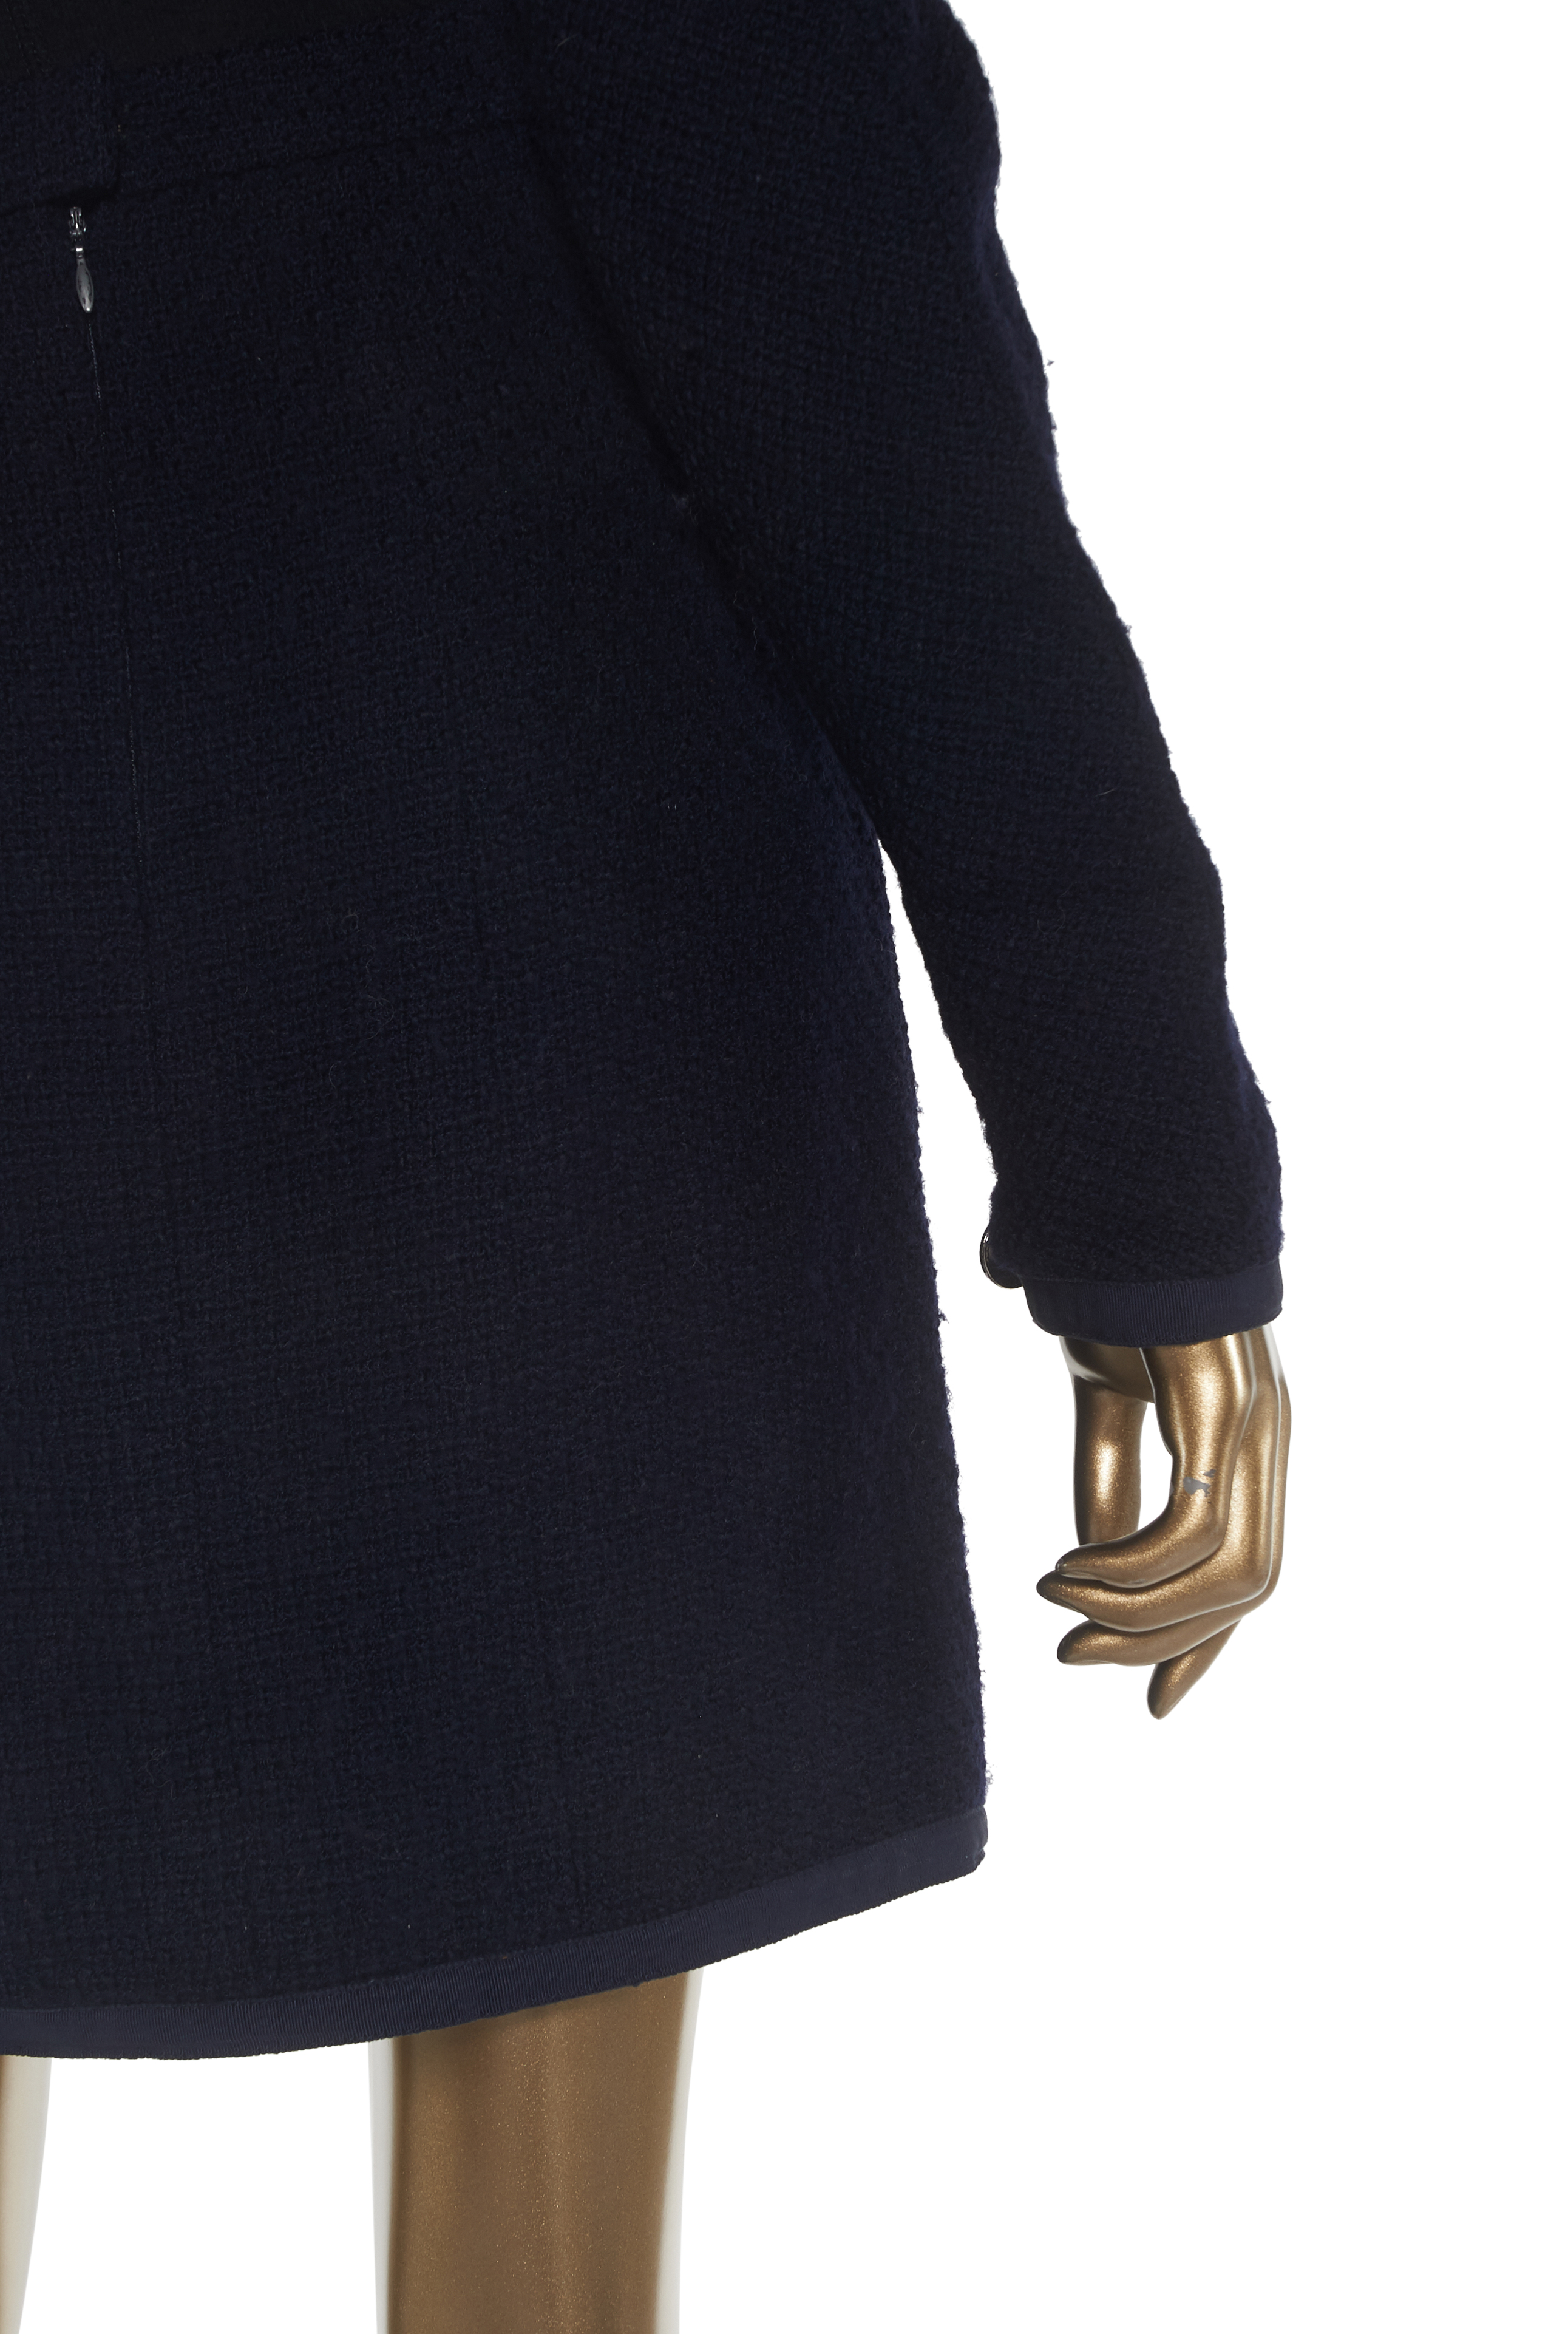 Vintage Chanel Tweed Skirt Suit & Cropped Jacket - Janet Mandell